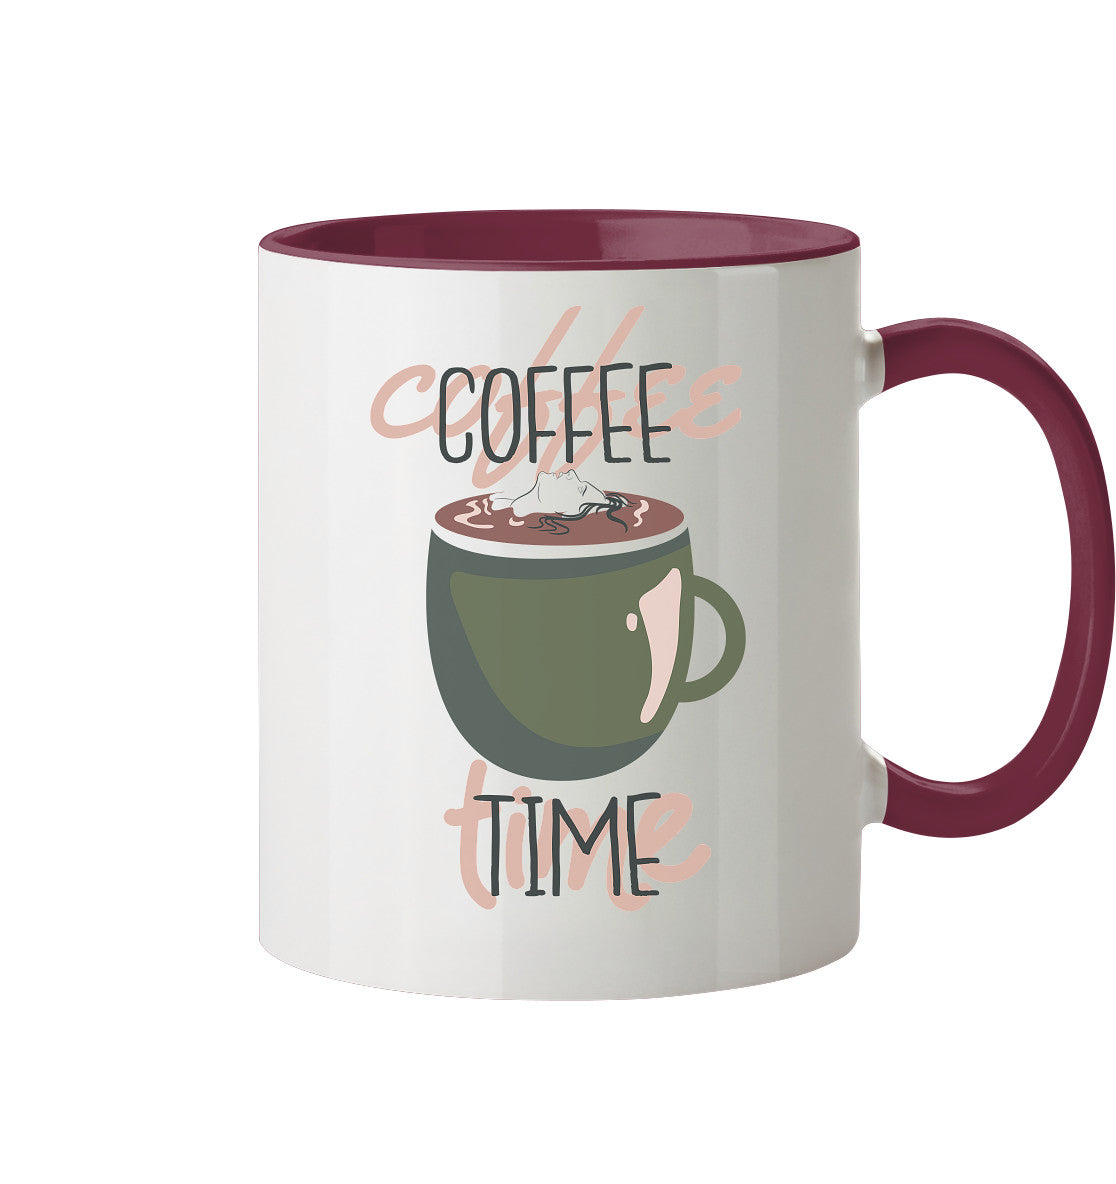 Coffee tiime - Tasse zweifarbig